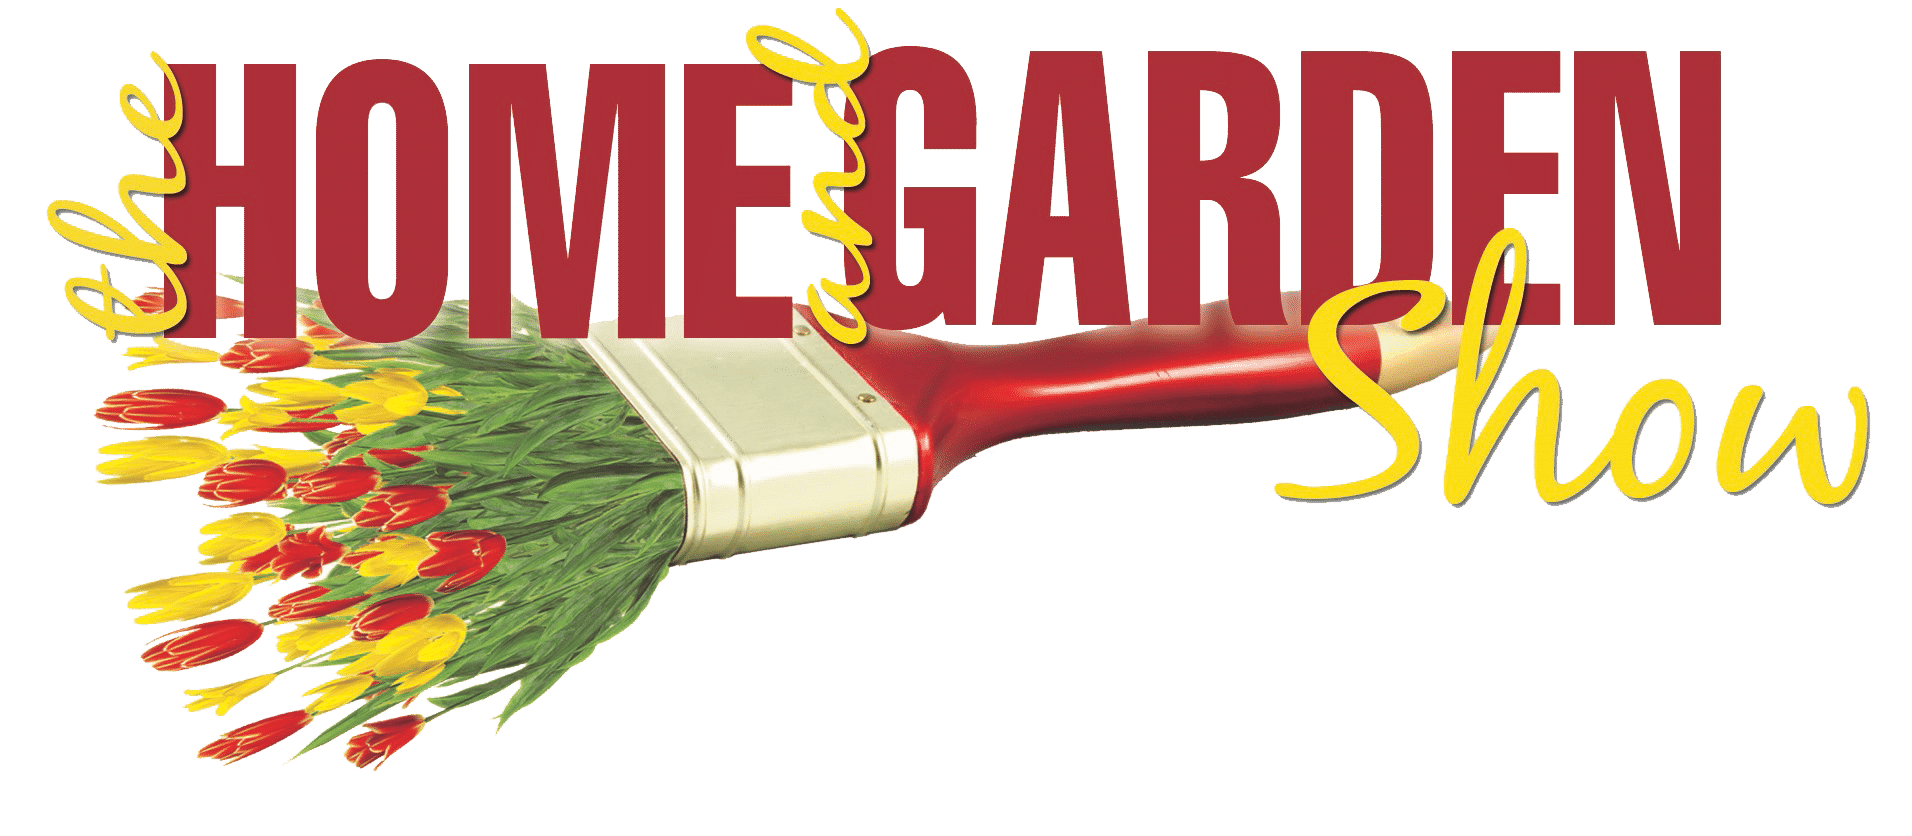 2017 Paducah Home and Garden Show